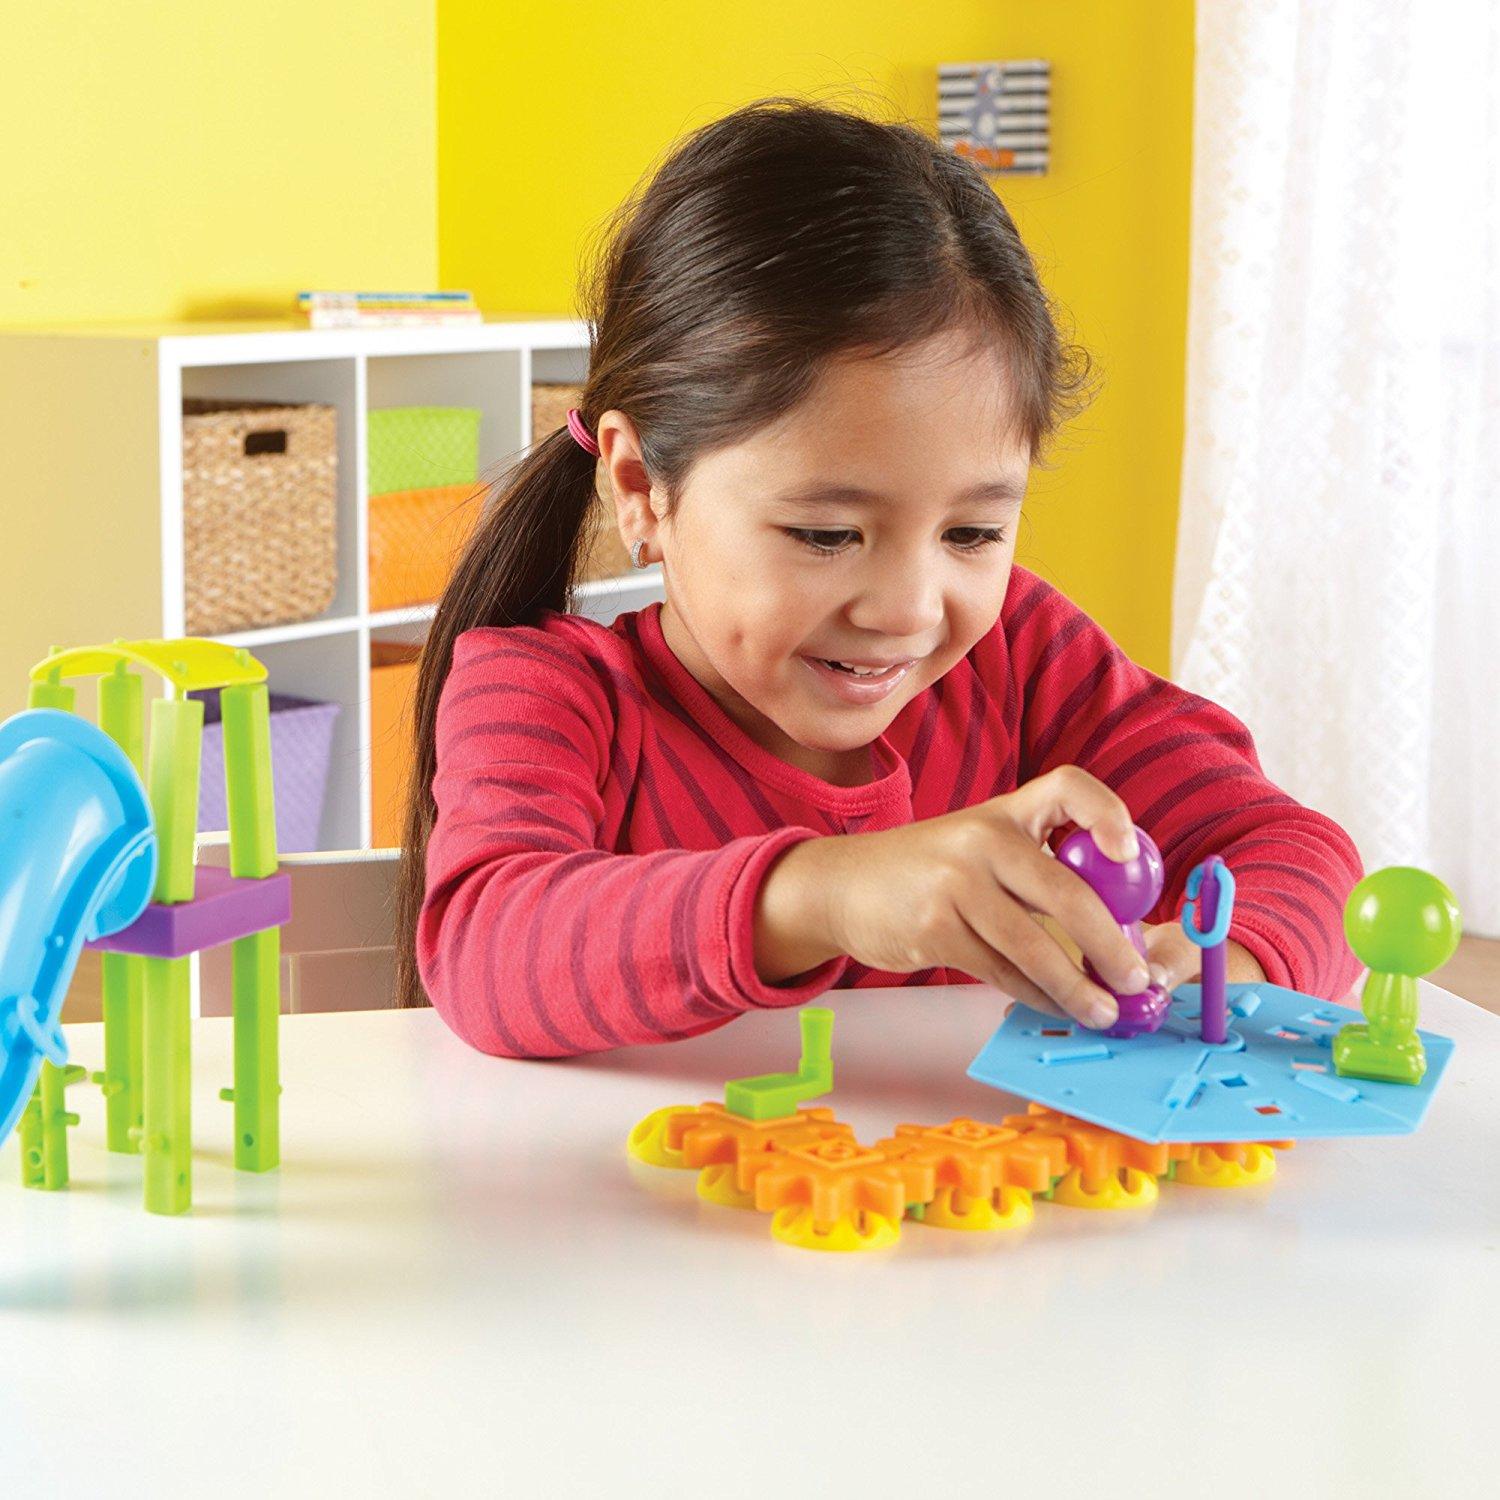 Set STEM - Parcul de distractii PlayLearn Toys